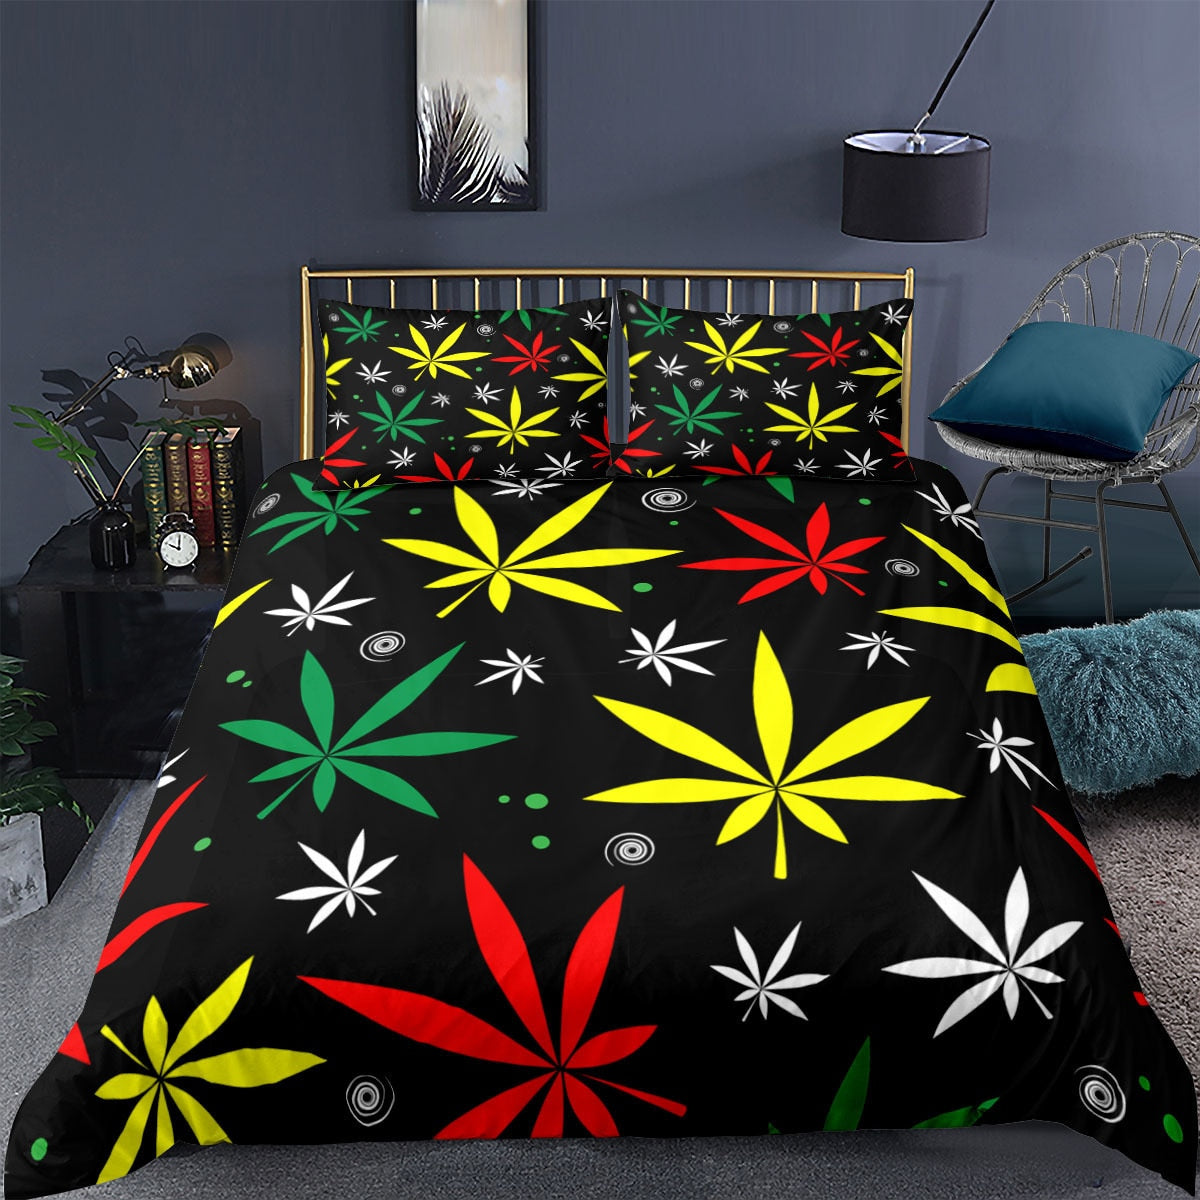 Assorted Vibrant Color Marijuana Leaf Duvet Cover Bedding Sets